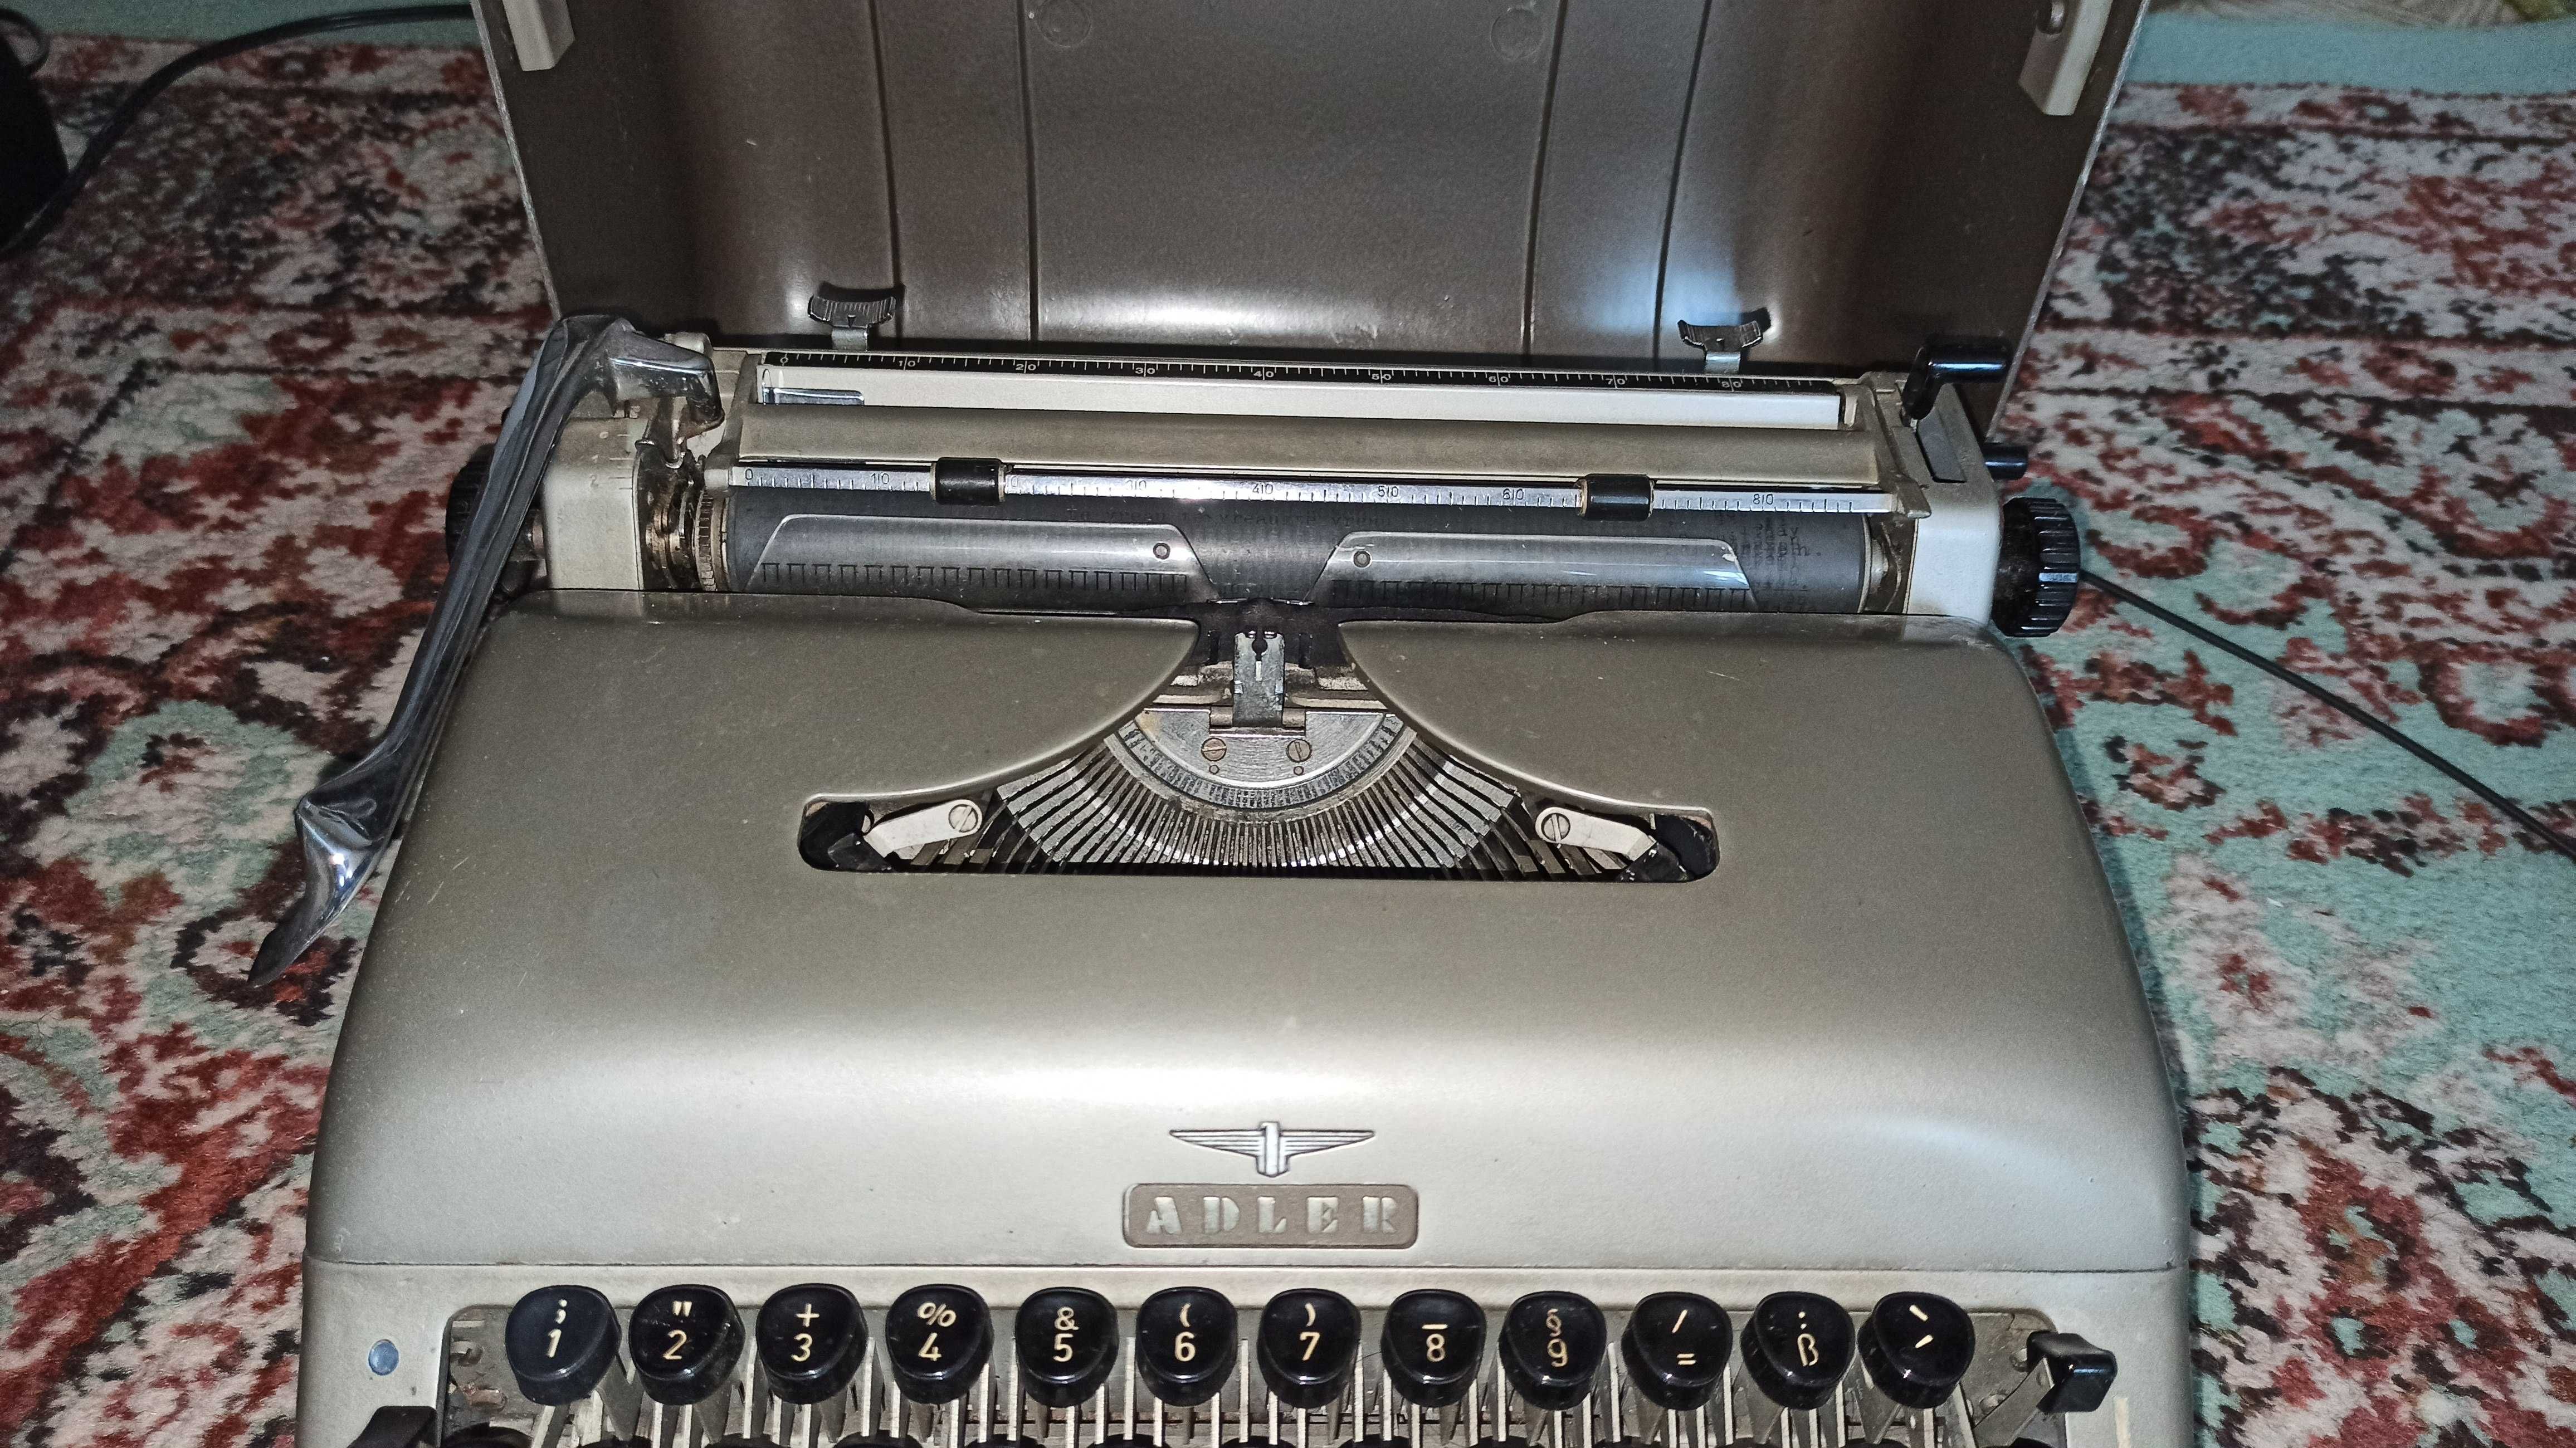 Masina de scris portabila Adler vintage